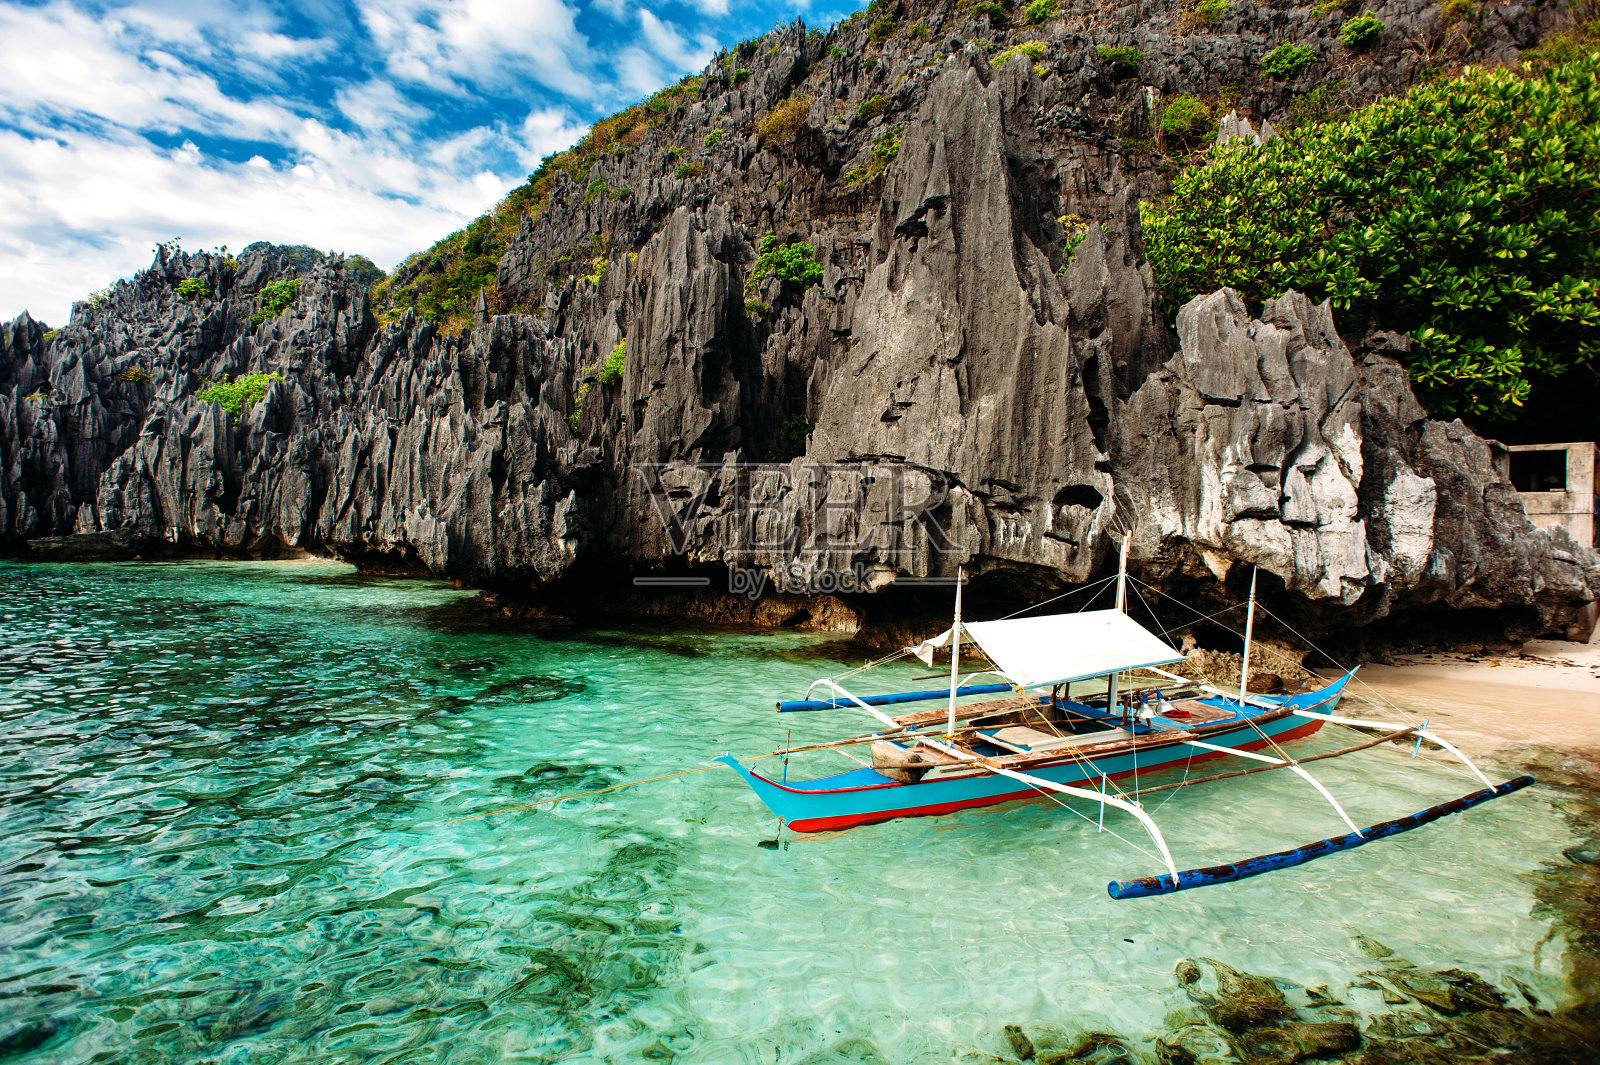 El Nido，巴拉望，菲律宾。菲律宾船在绿松石清澈的水与尖锐的岩石背景。热带国家。广角照片摄影图片